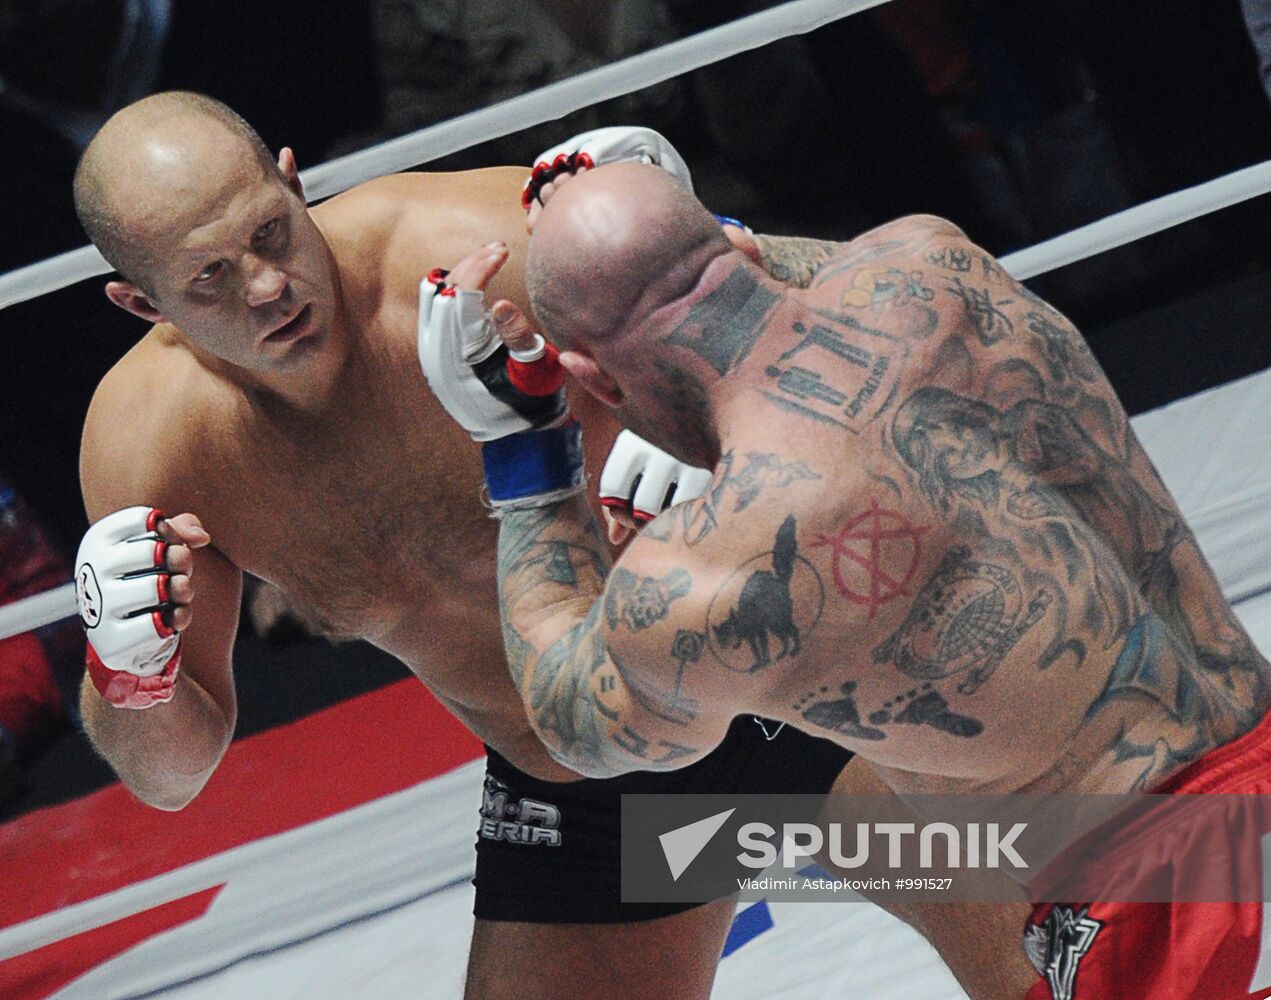 Mixed Martial Arts. Fight between F. Emelianenko and J. Monson